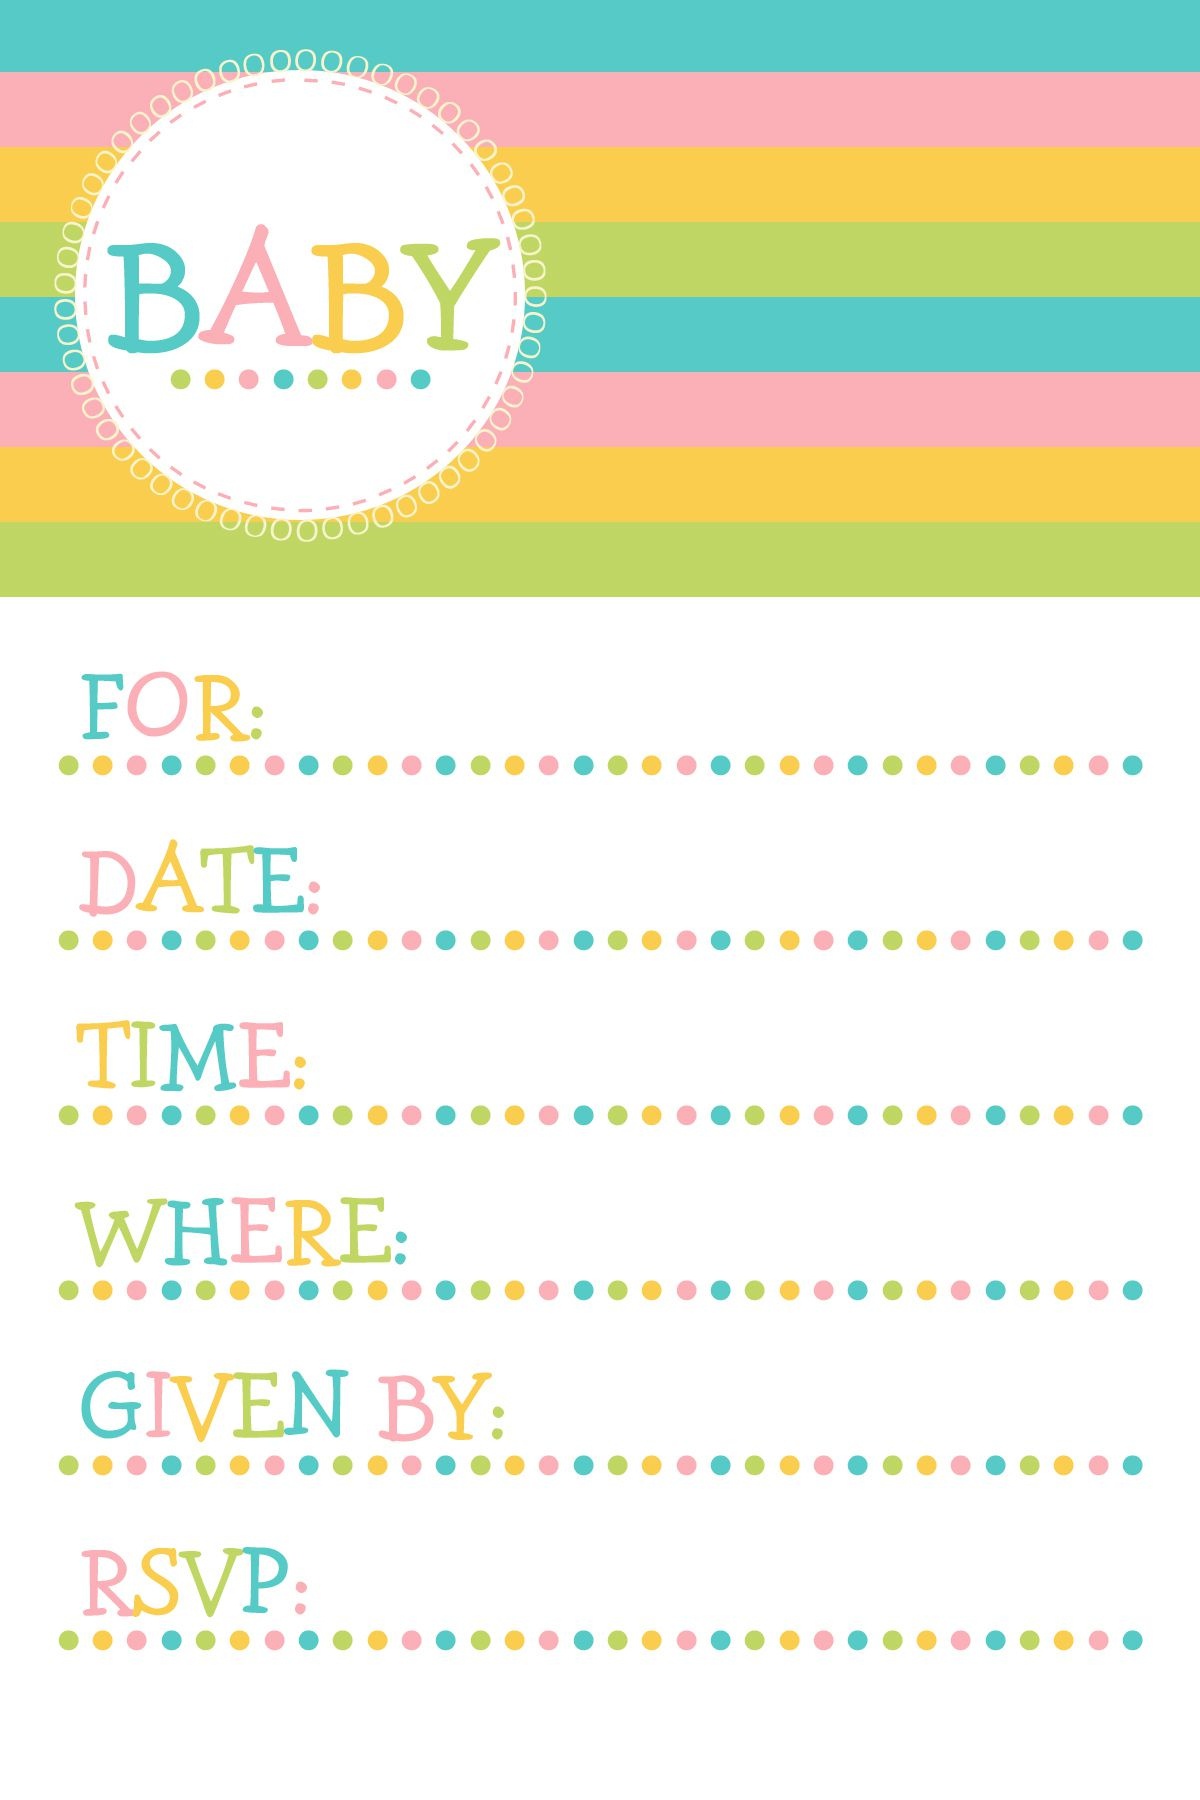 25 Adorable Free Printable Baby Shower Invitations - Free Baby Shower Invitation Maker Online Printable